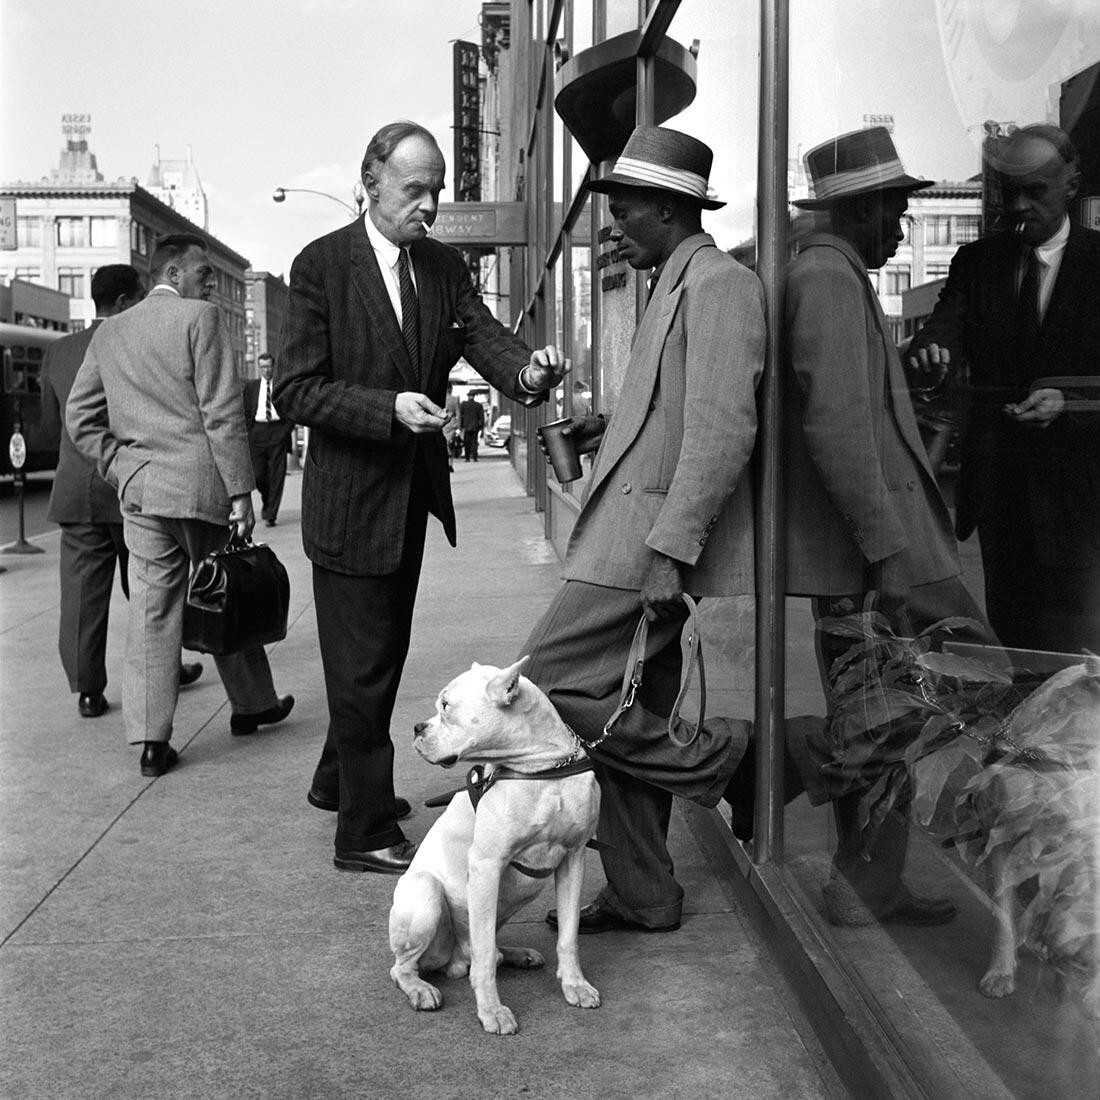 Сентябрь 1956 г., Нью-Йорк, штат Нью-Йорк. Фотограф Вивиан Майер